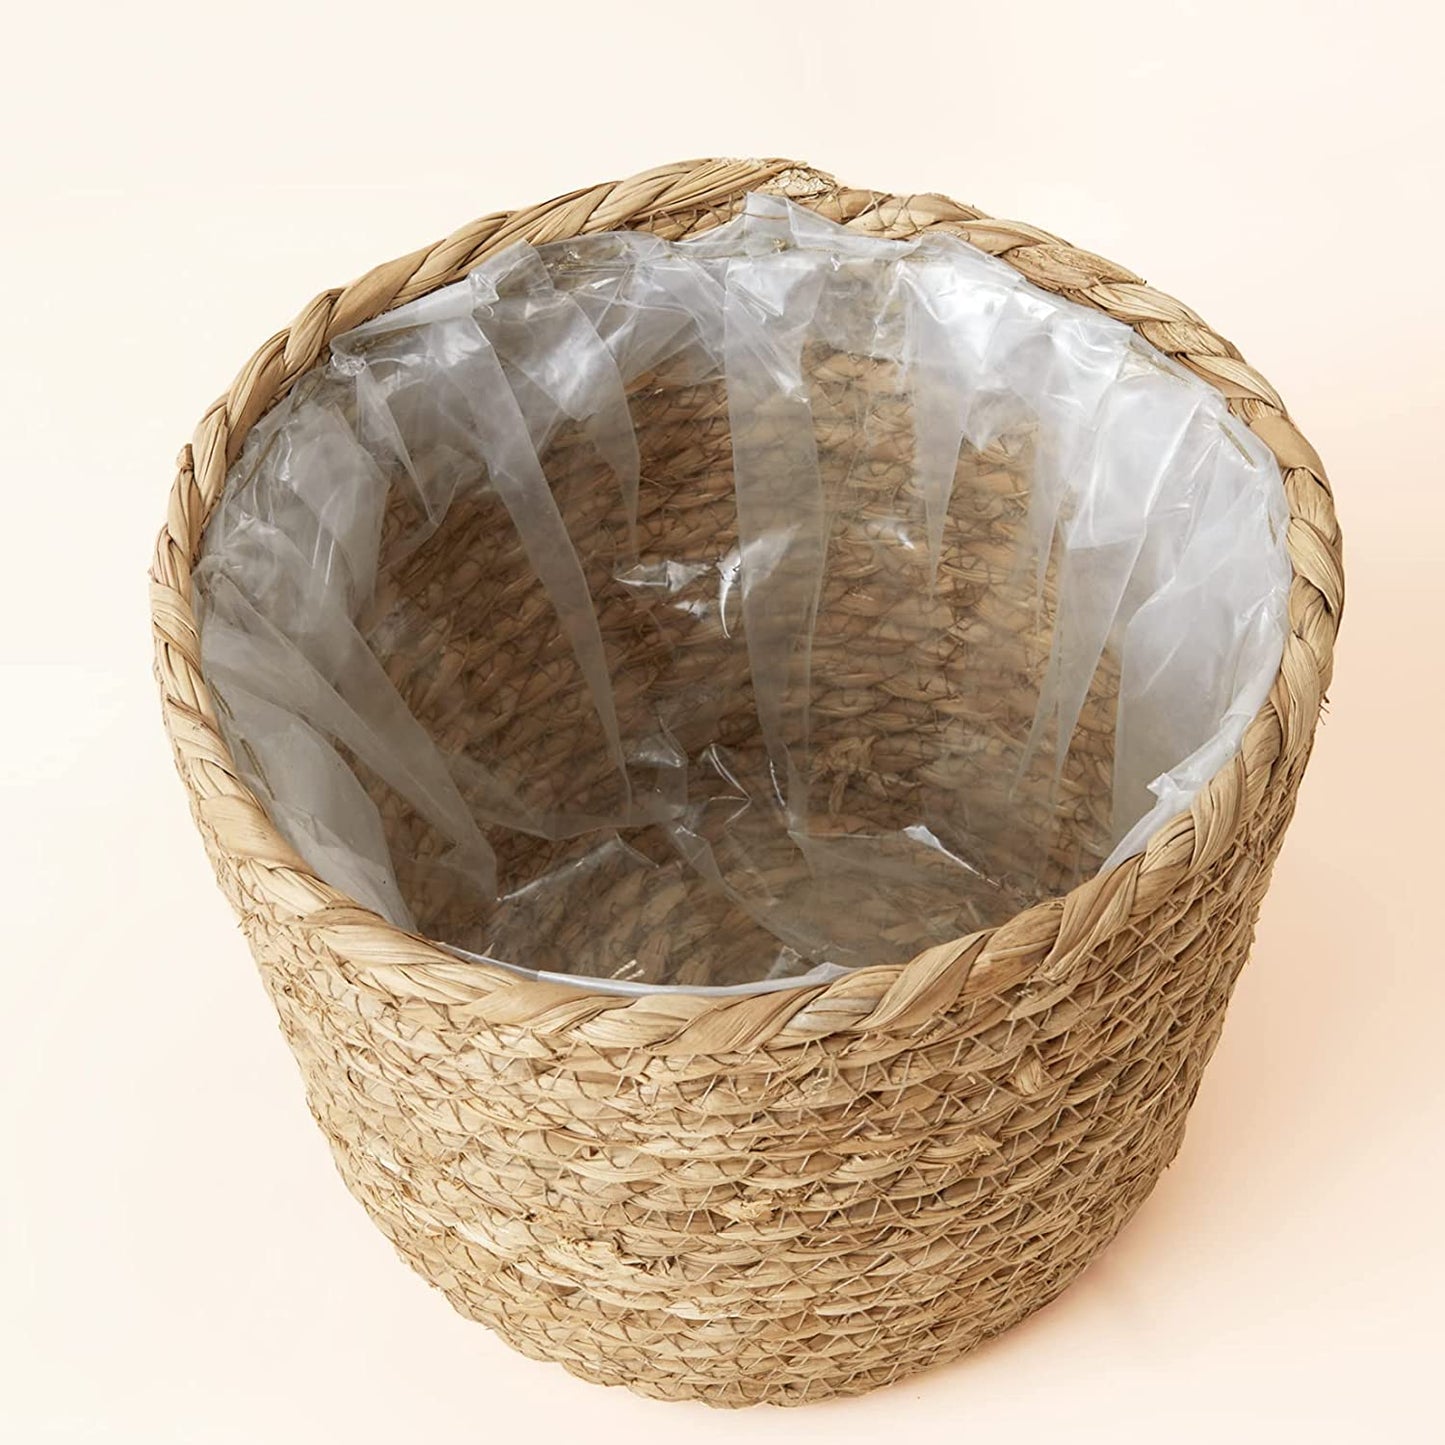 La Jolíe Muse Seagrass Planter Basket Indoor, Flower Pots Cover, Plant Containers, Natural(3-Pack)